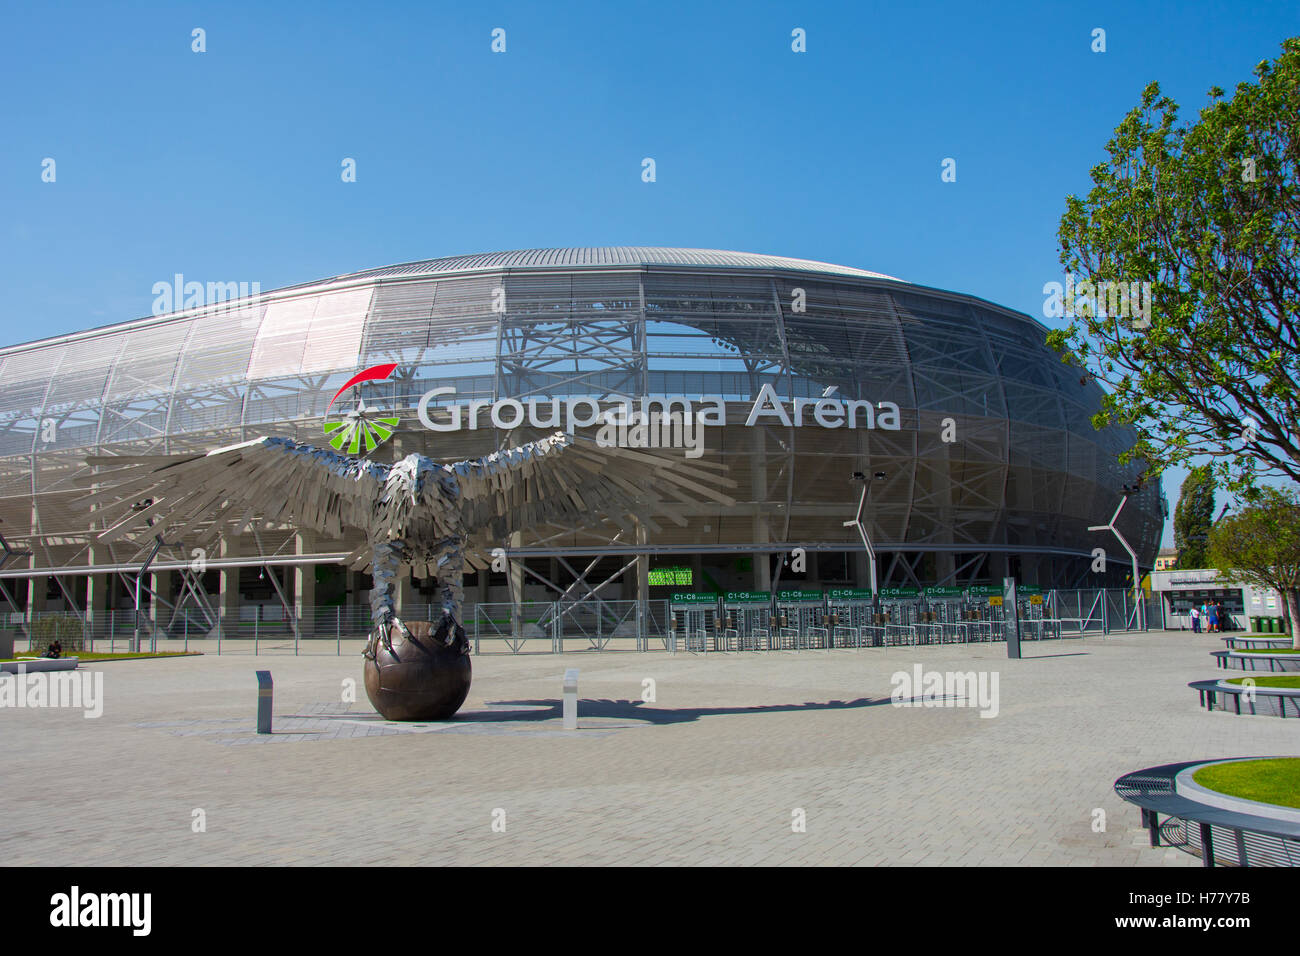 Ferencvaros Stadium - Groupama Arena - Football Tripper